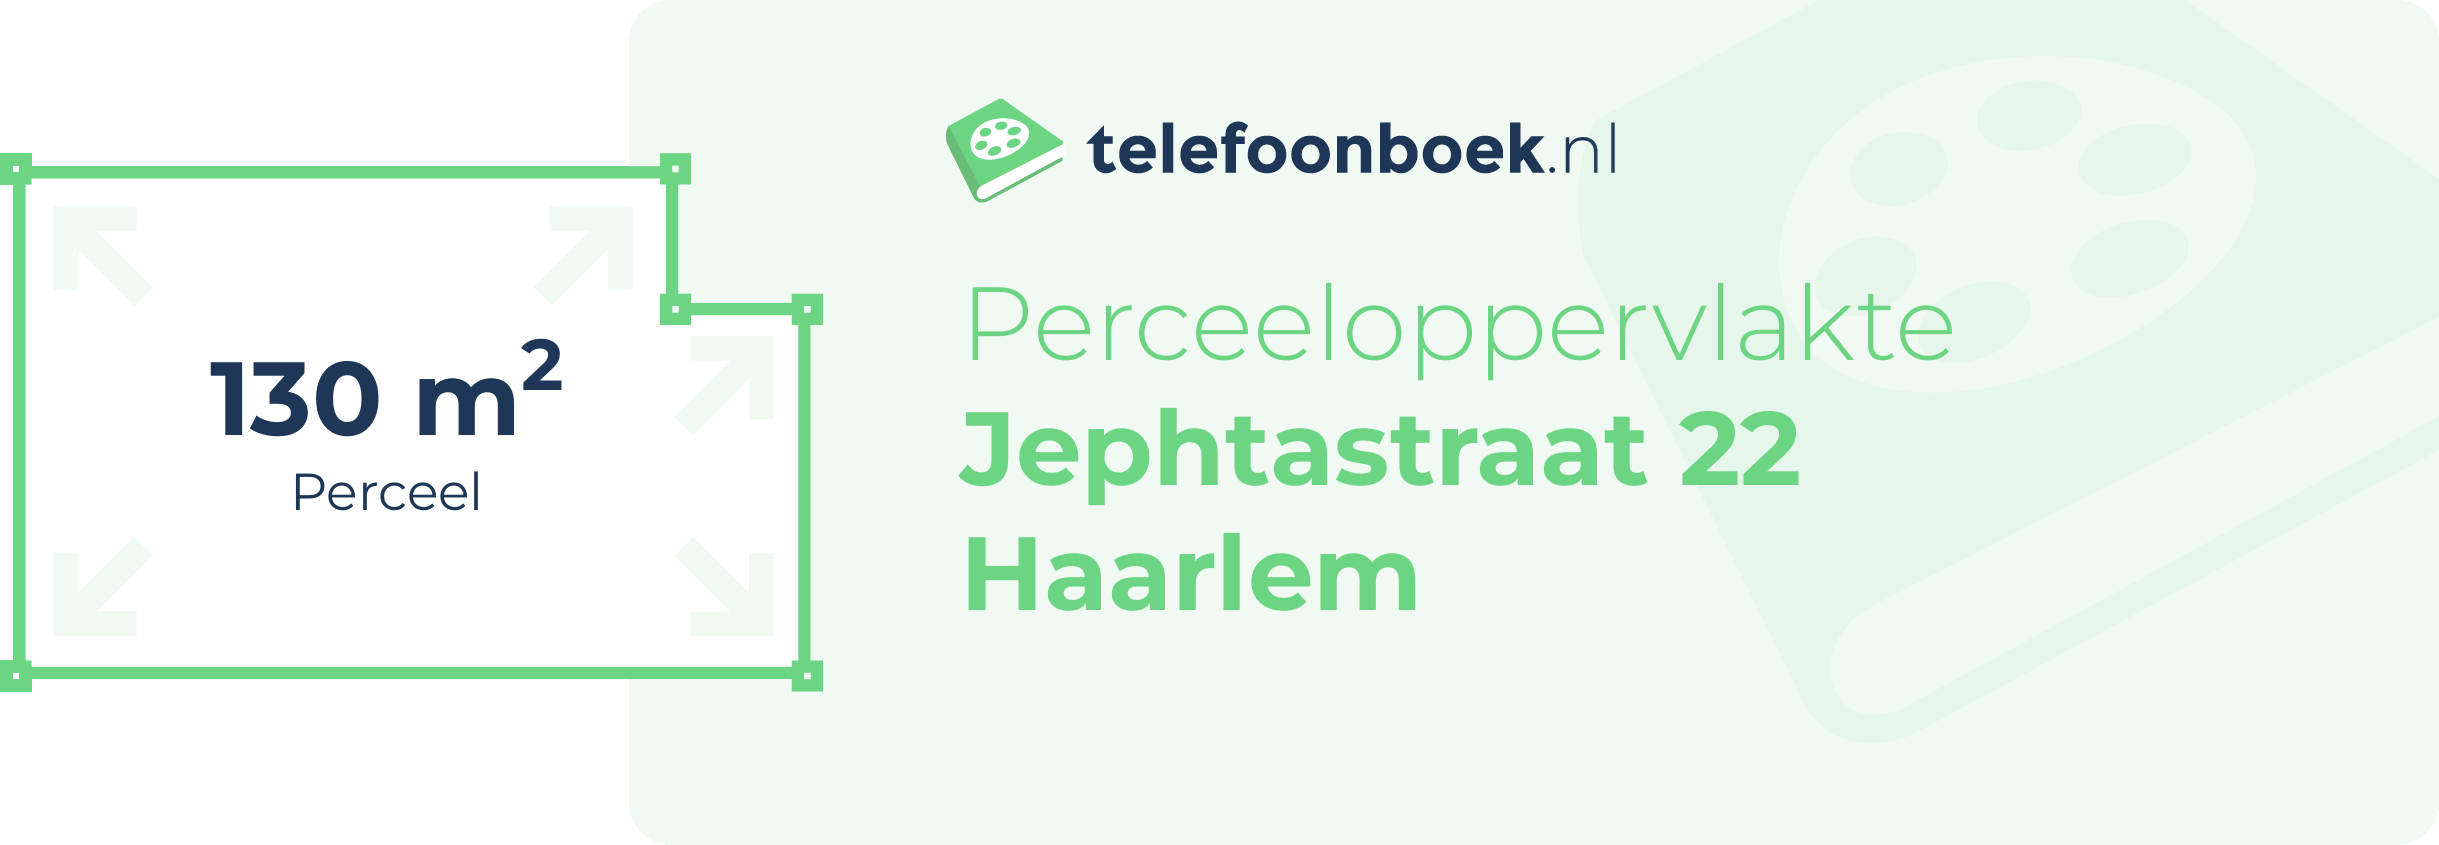 Perceeloppervlakte Jephtastraat 22 Haarlem